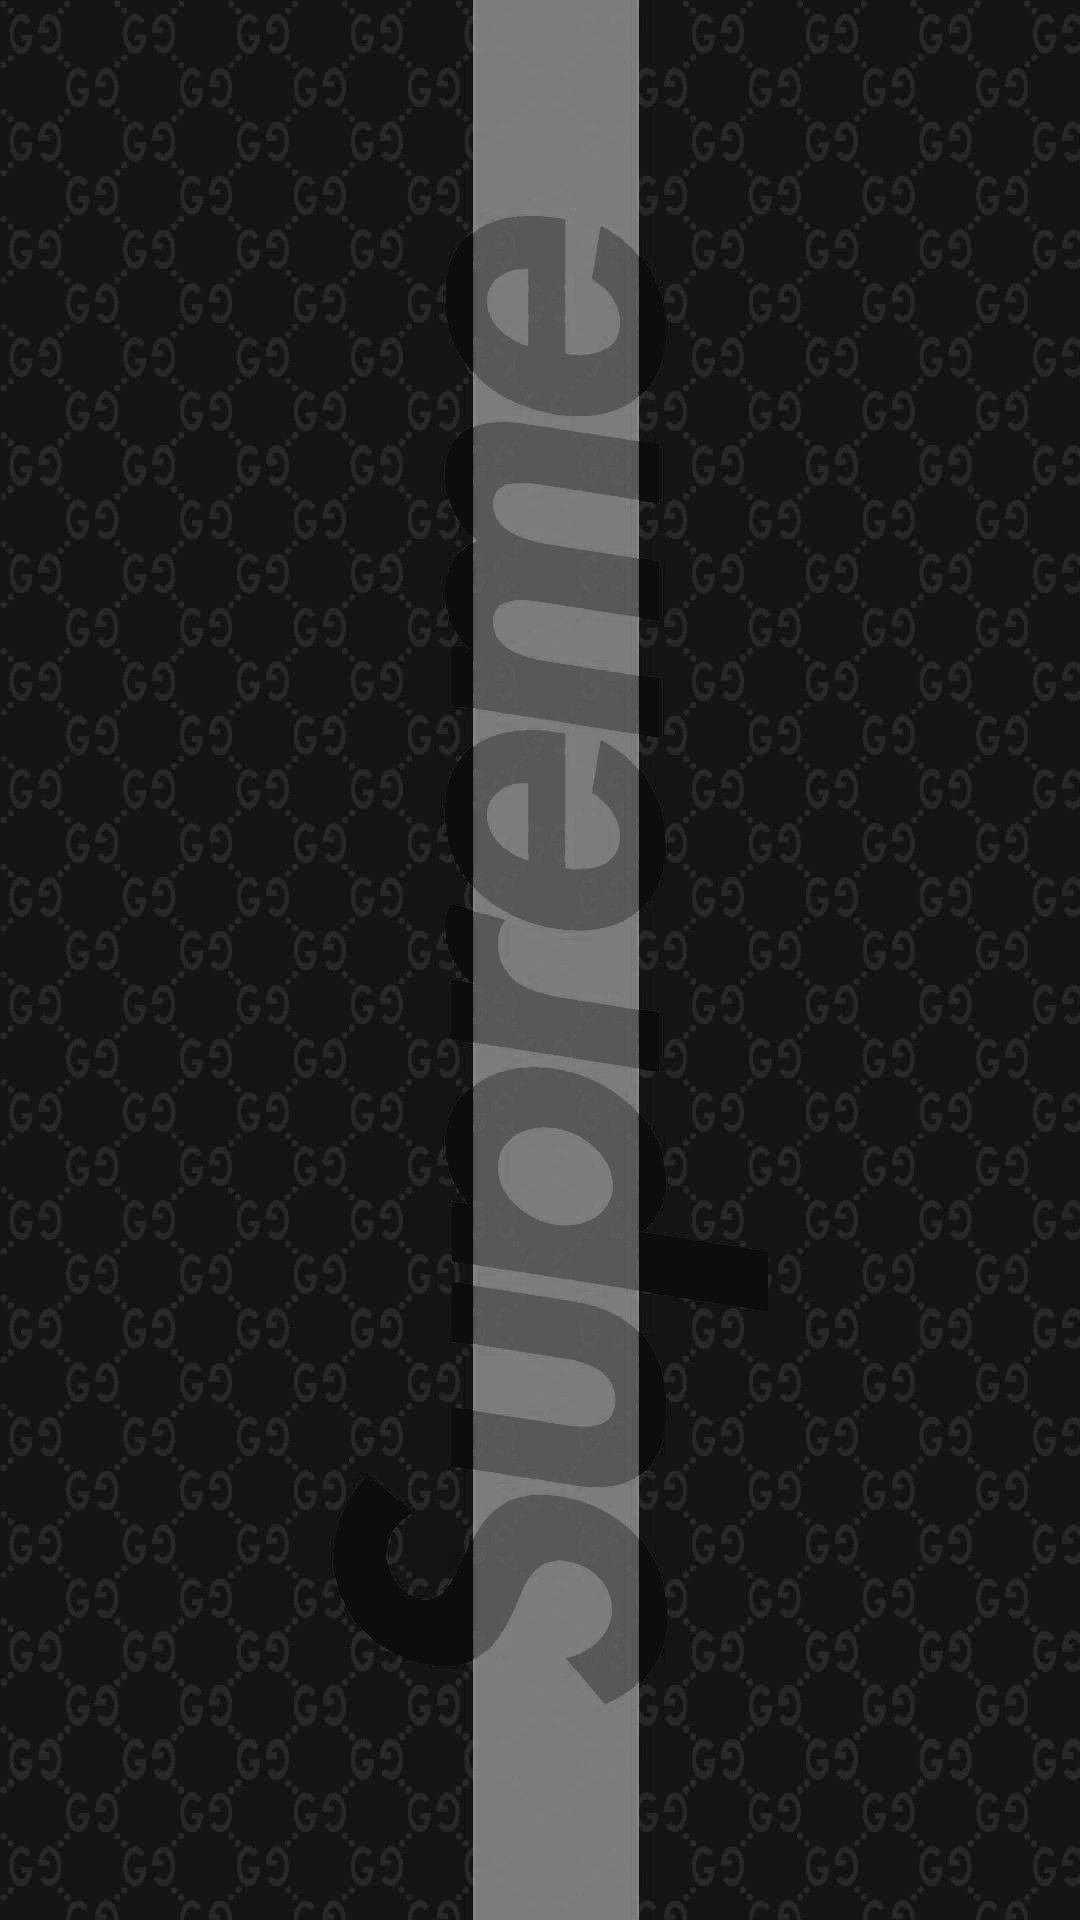 supreme #black #wallpaper #iPhone #android  Supreme iphone wallpaper, Supreme  wallpaper, Adidas wallpapers